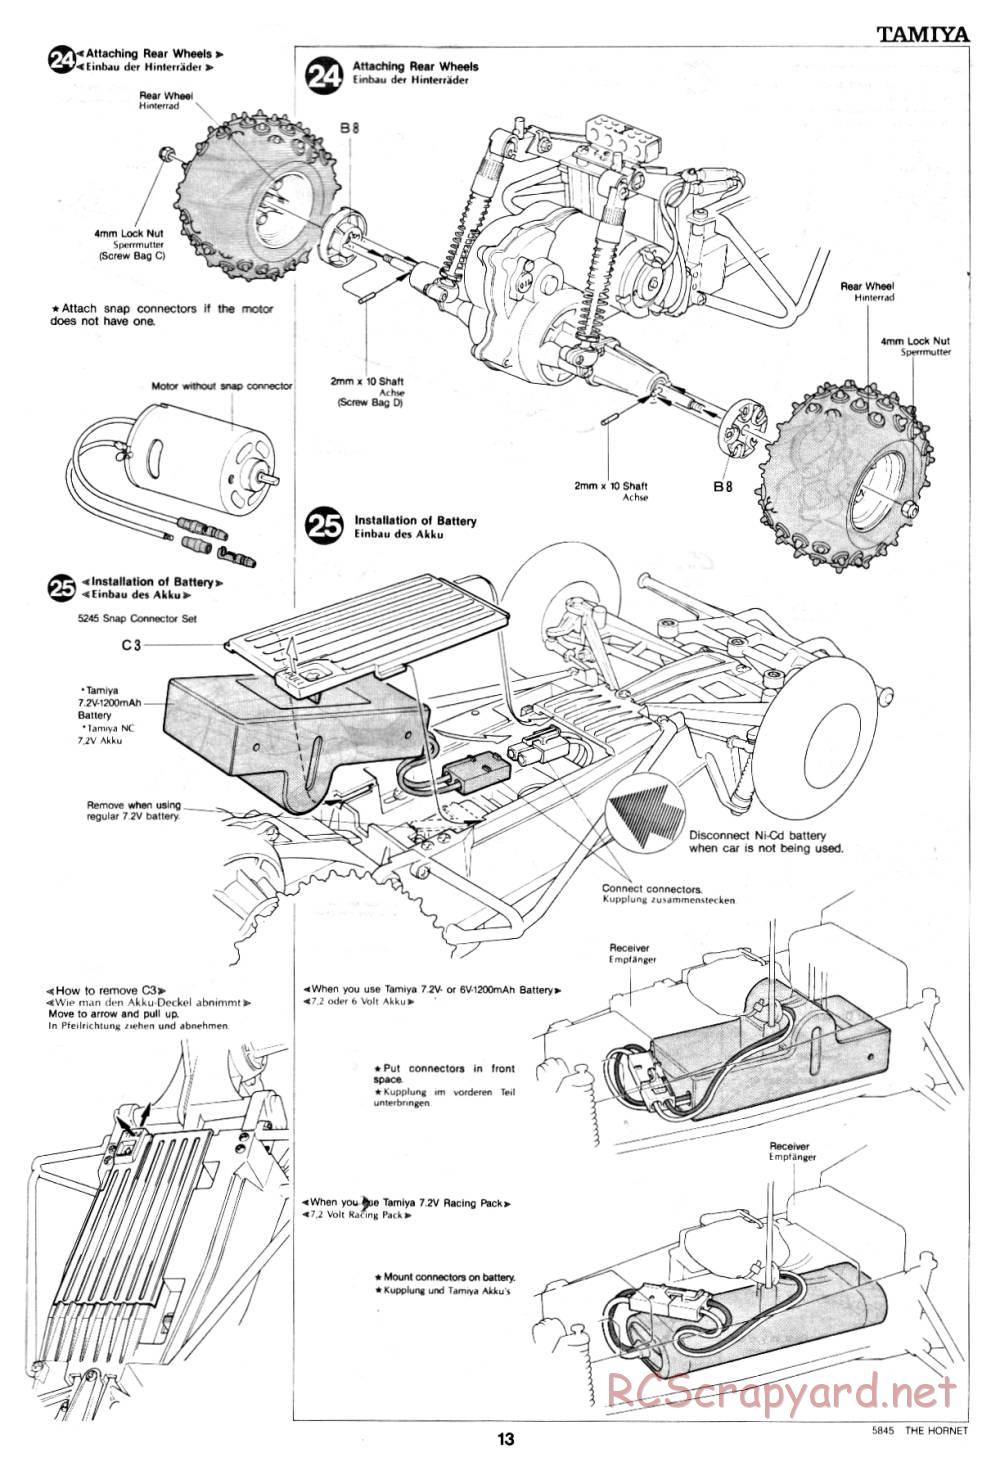 Tamiya - The Hornet - 58045 - Manual - Page 13